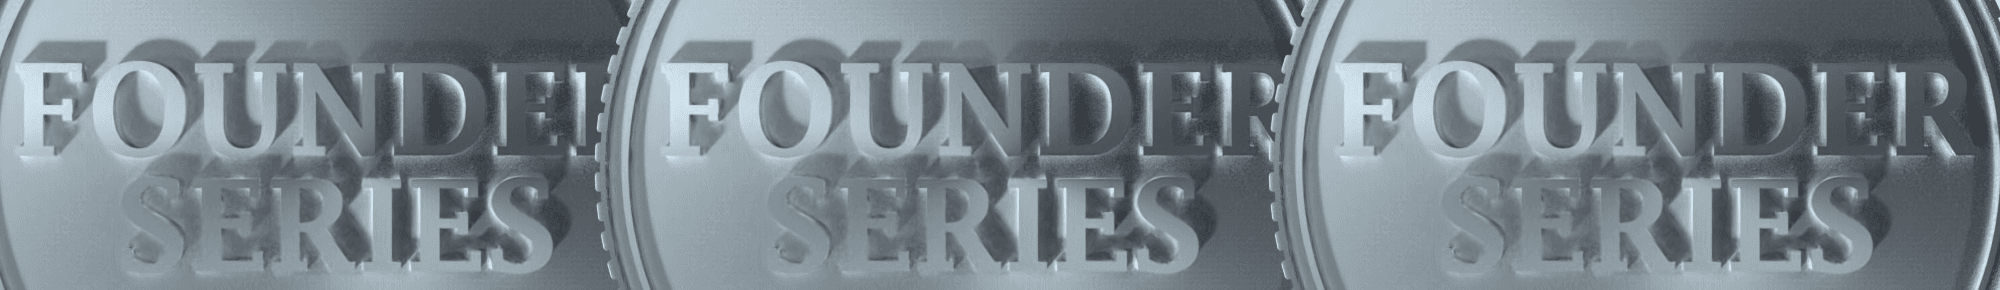 FounderSeries banner